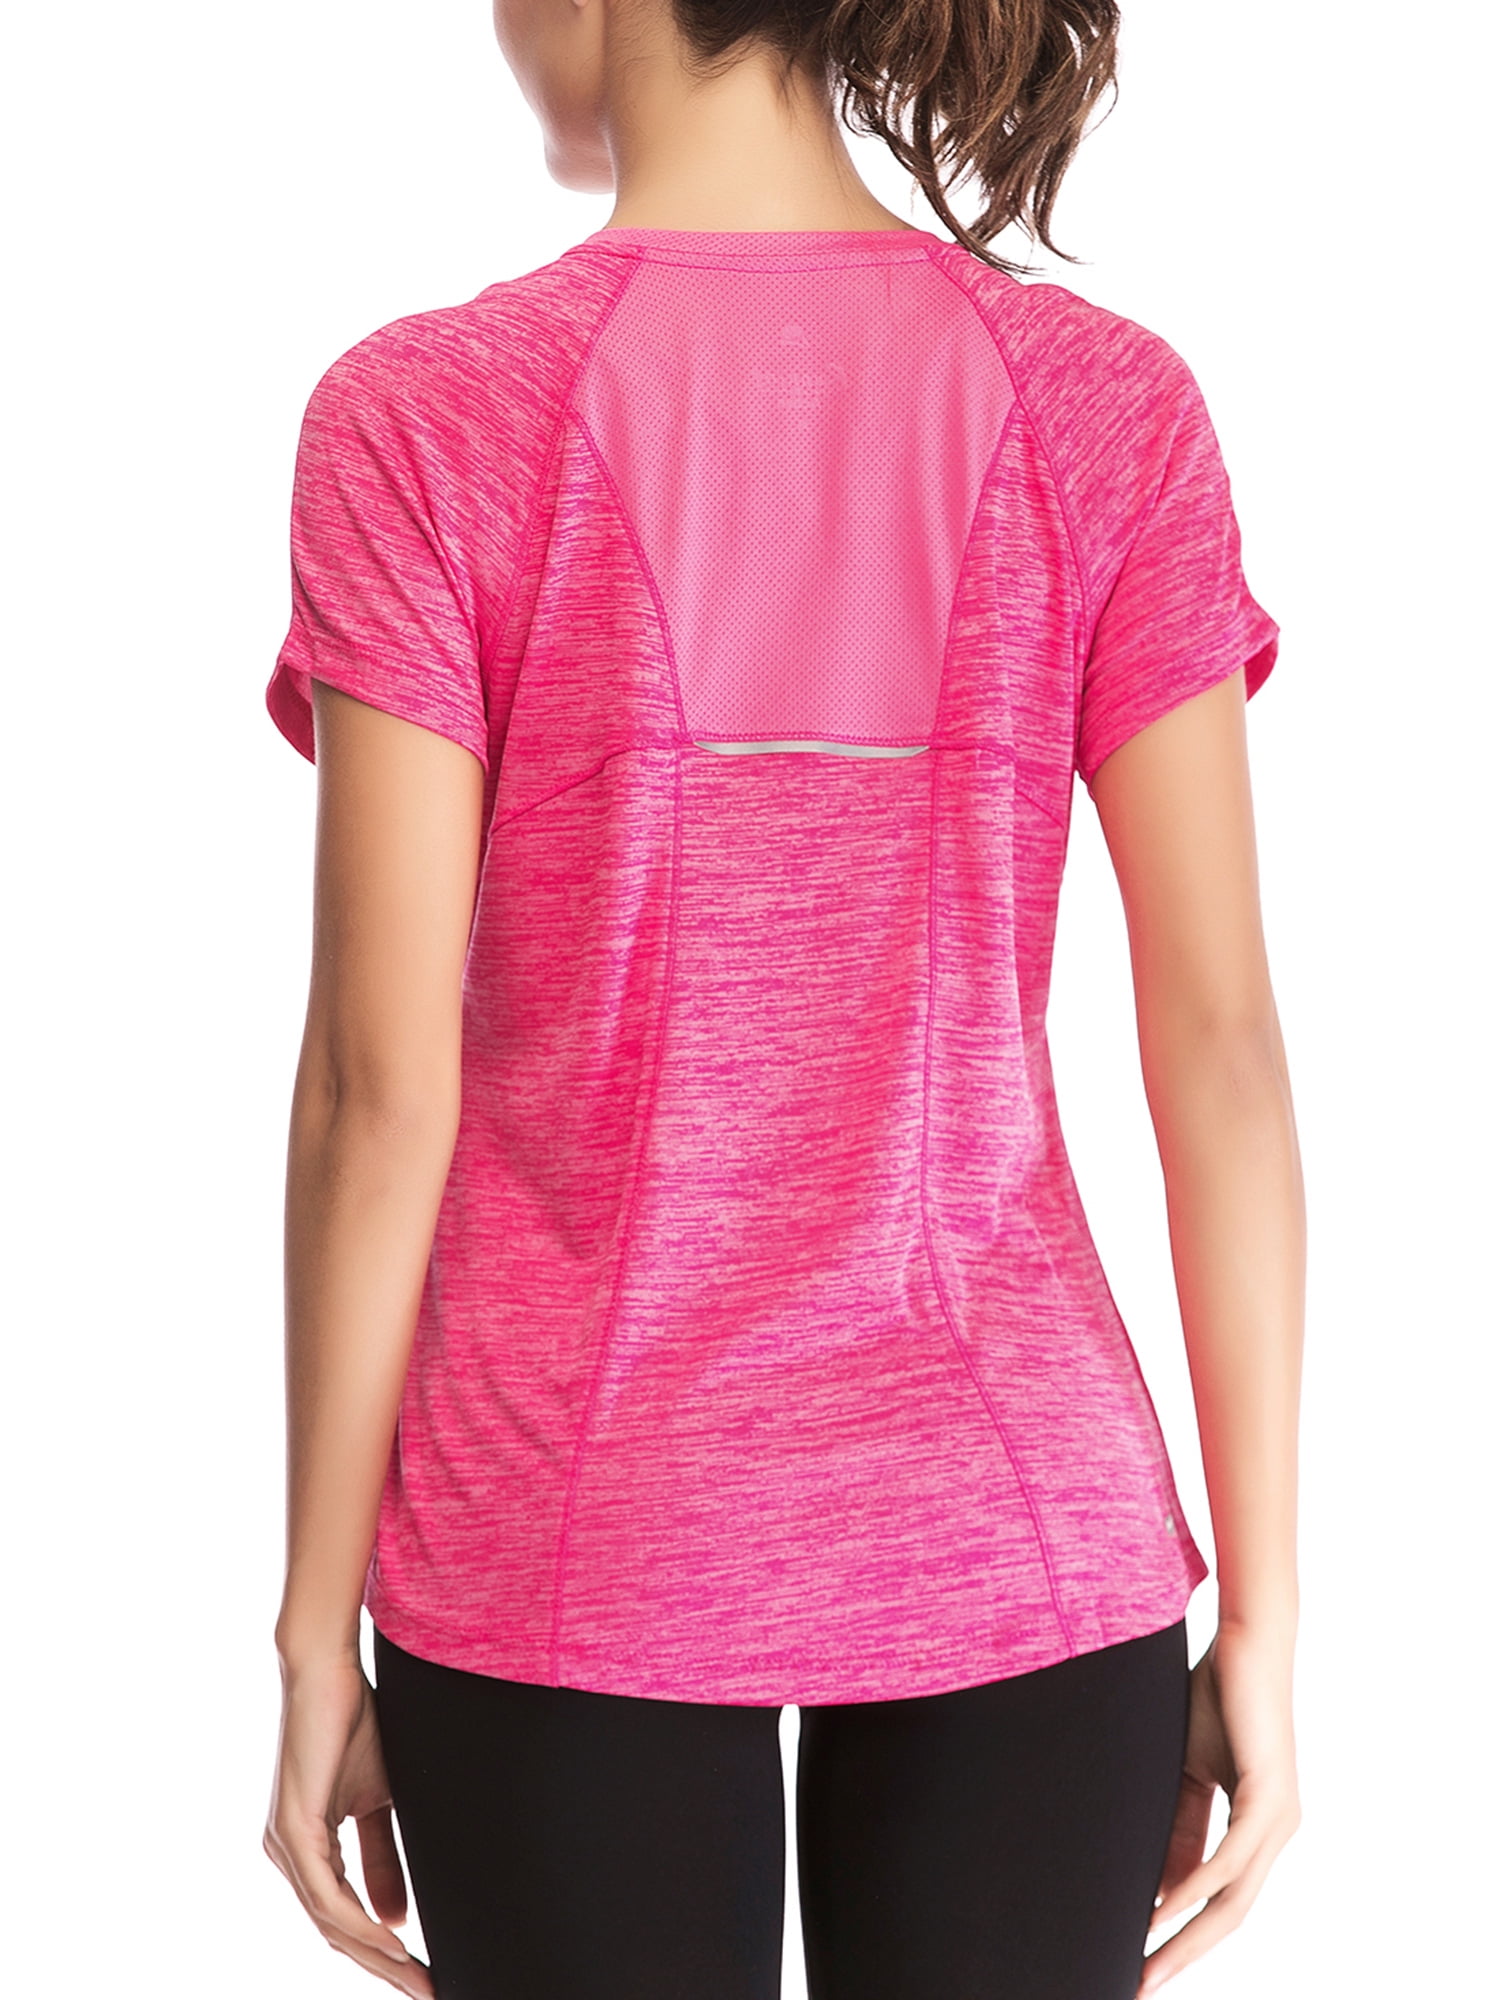 SAYFUT Women's Dry Fit Athletic Shirts Short Sleeve Moisture Wicking ...